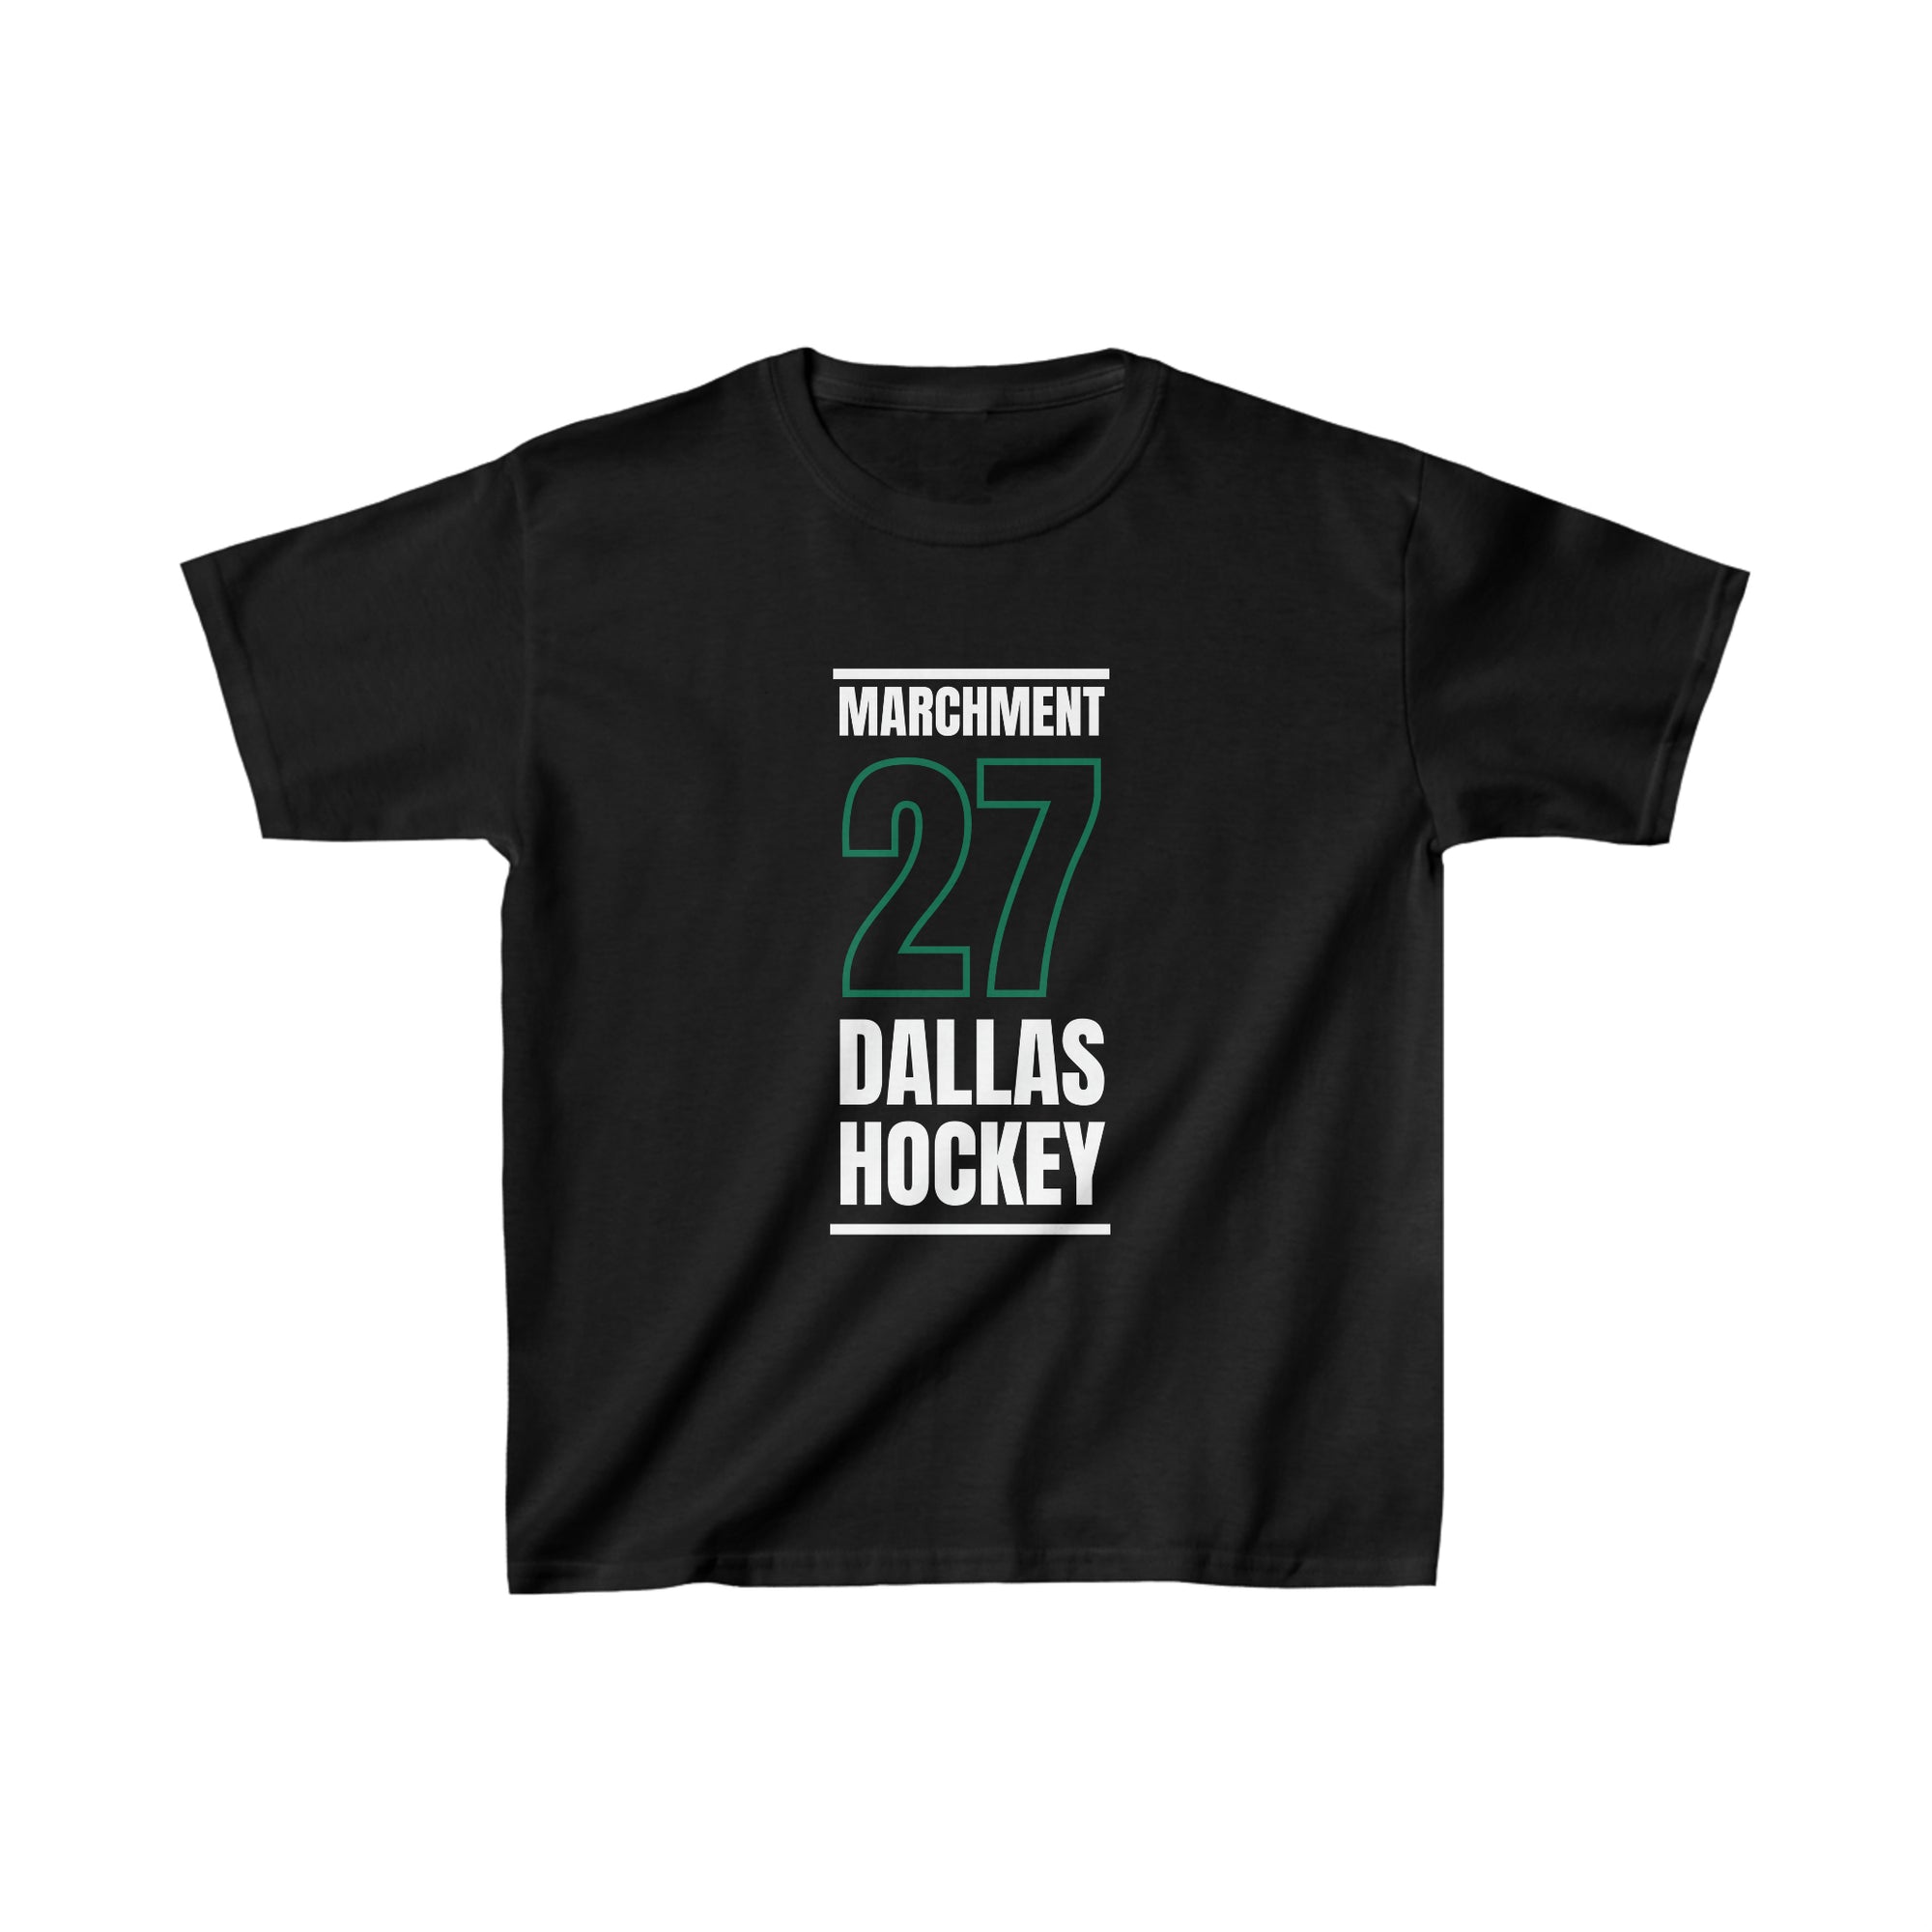 Marchment 27 Dallas Hockey Black Vertical Design Kids Tee